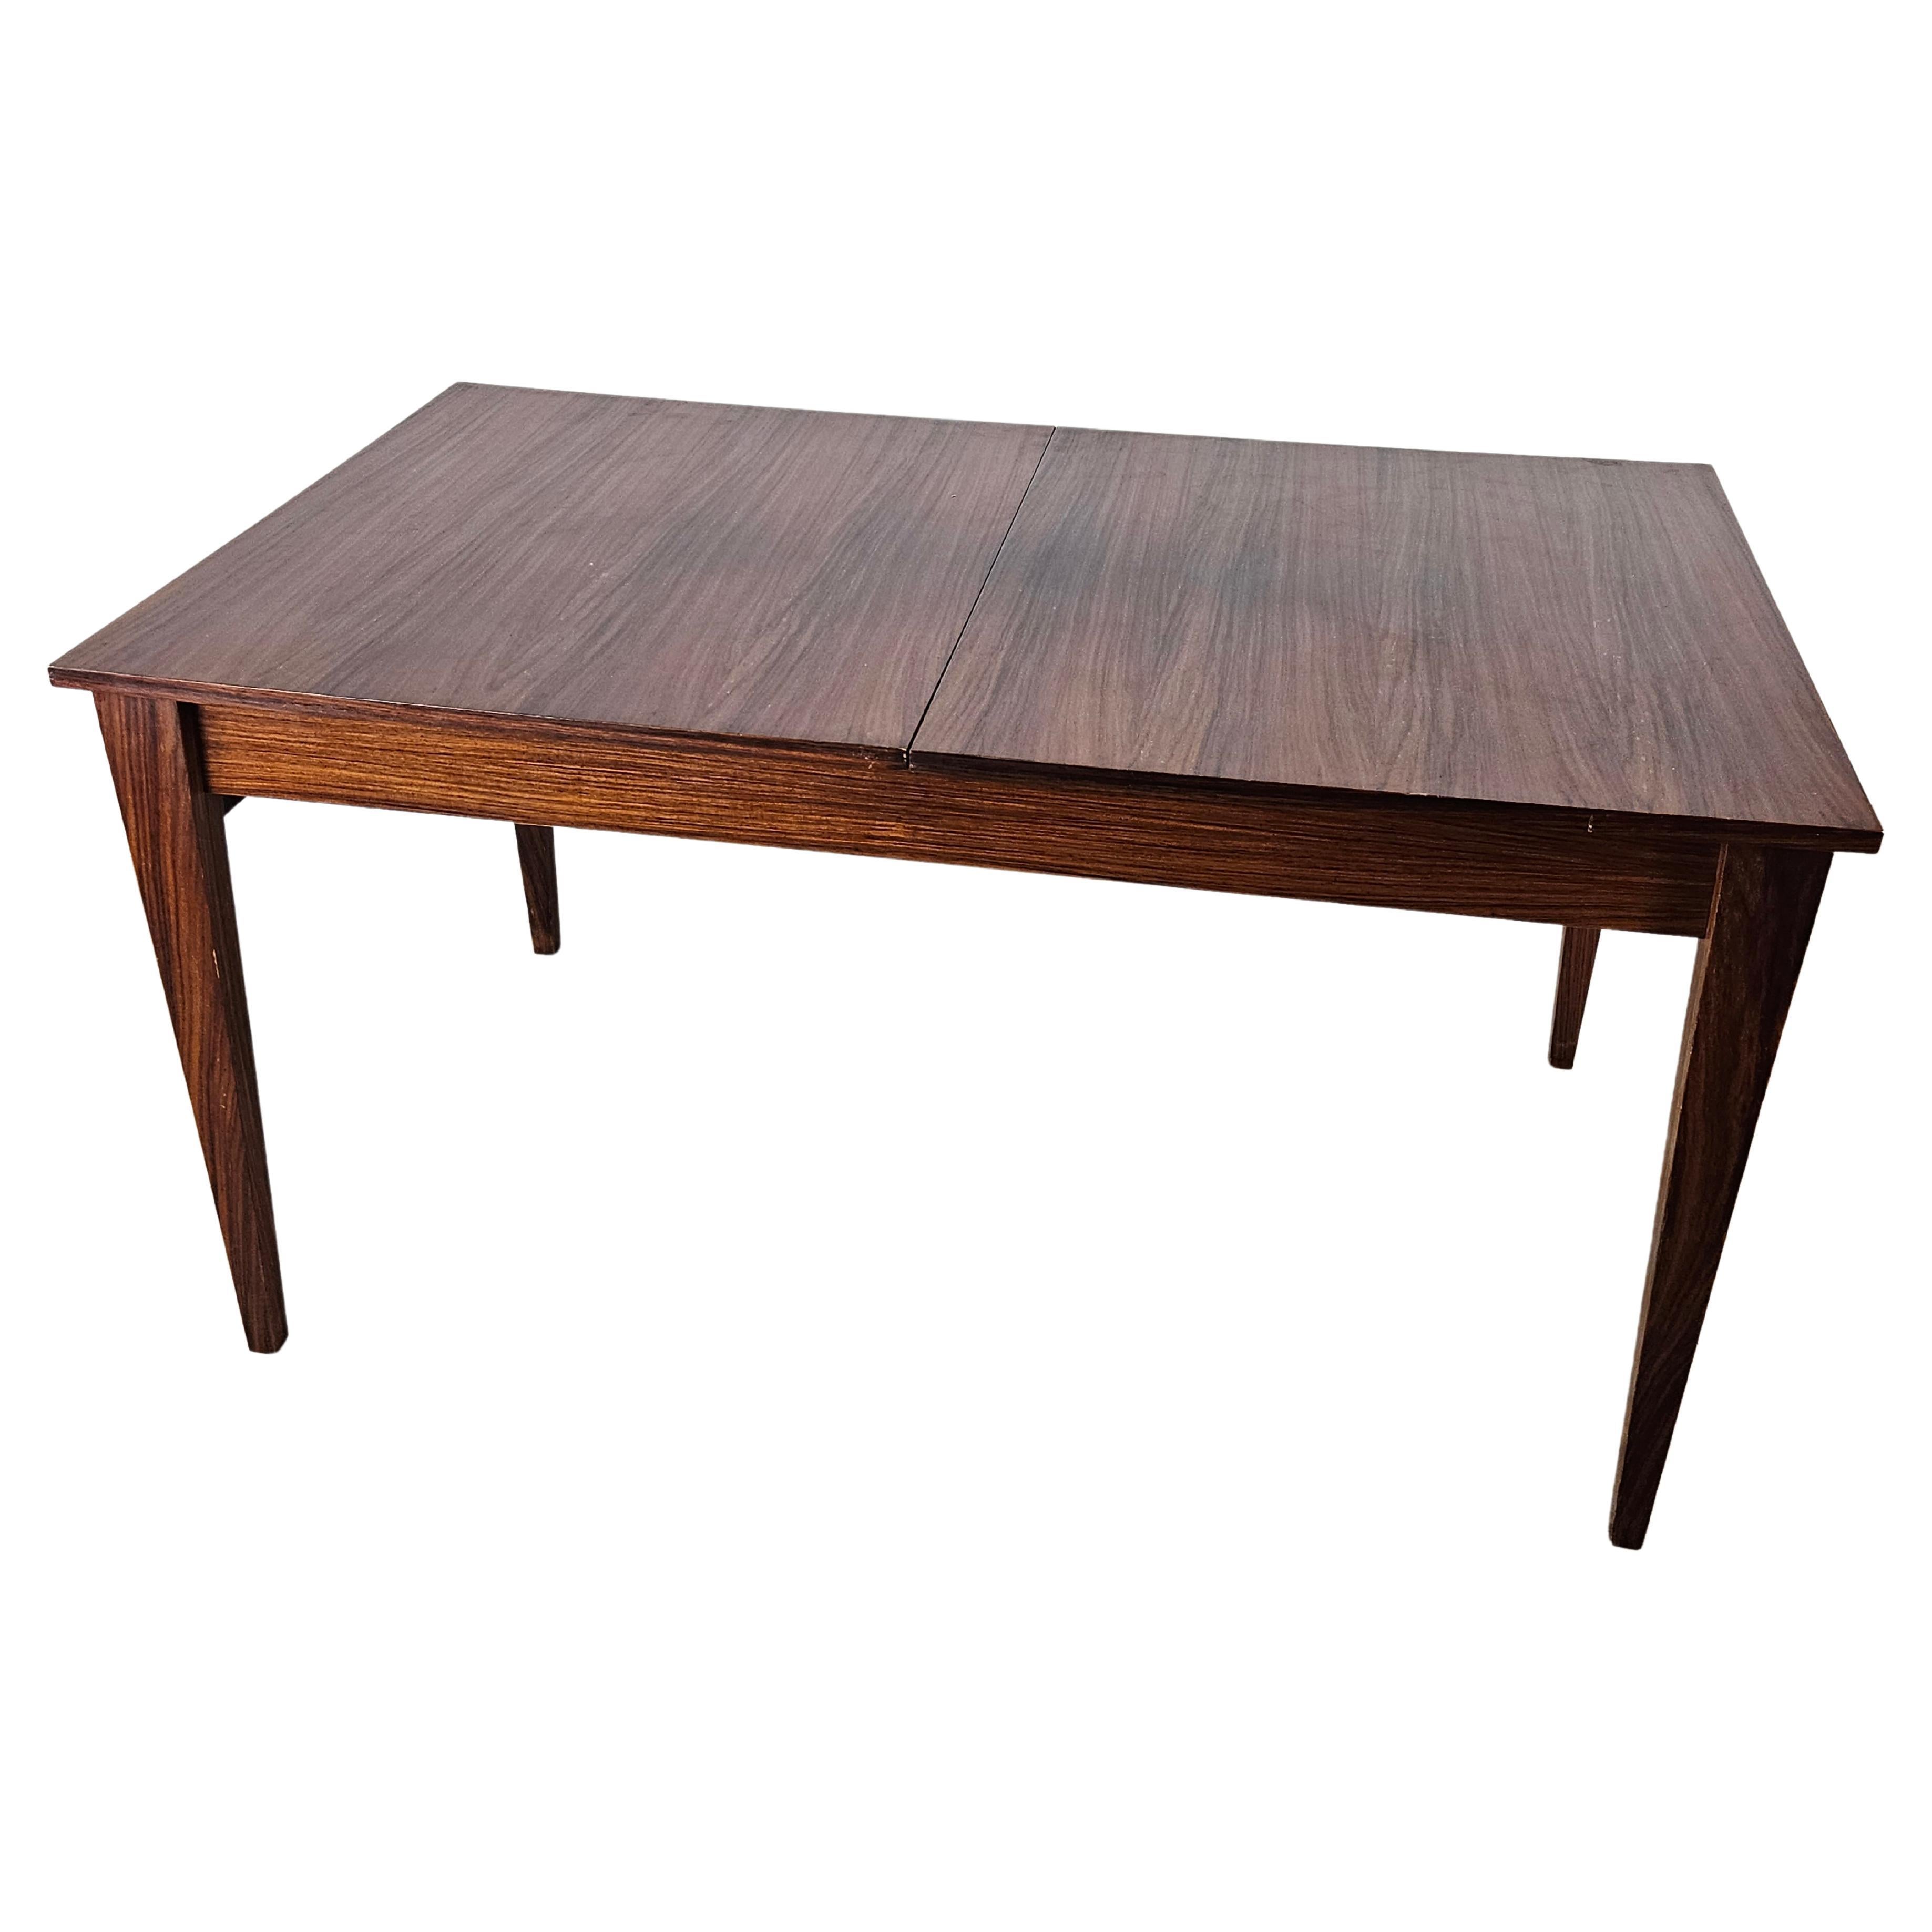 Scandinavian style extending laminate table For Sale